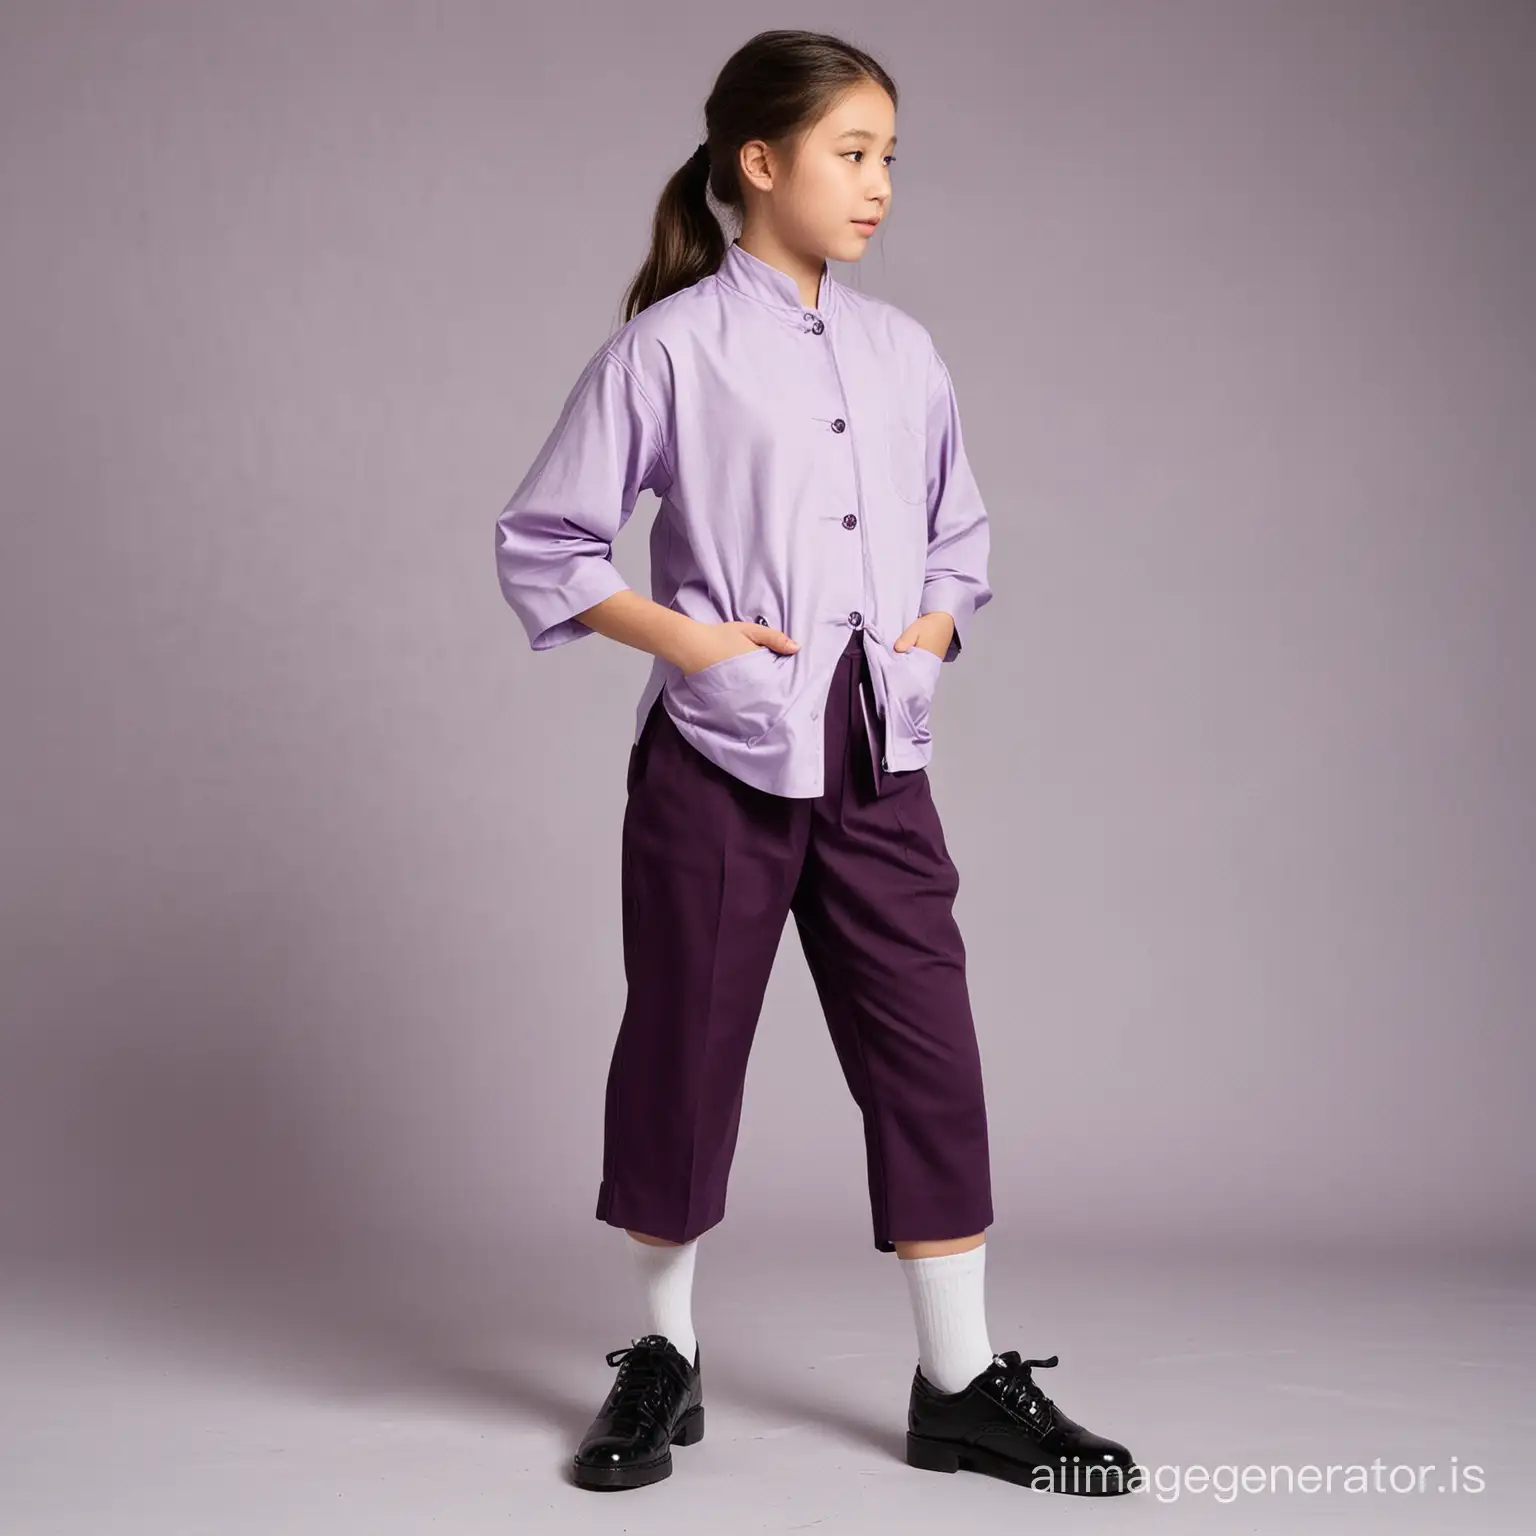 Adolescent-Girl-in-Lavender-Top-and-Dark-Grape-School-Uniform